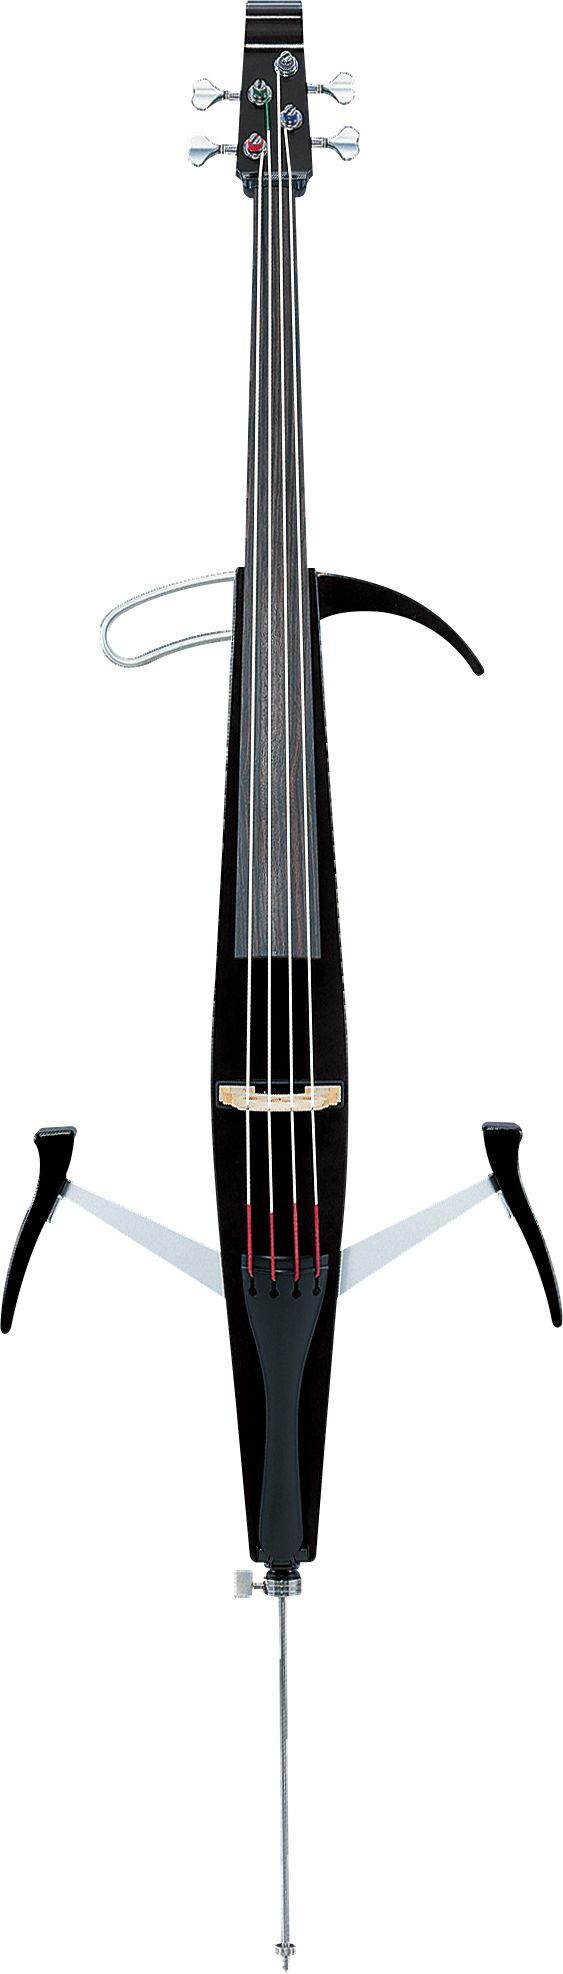 Yamaha Svc-50 Silent Cello - Electric cello - Main picture